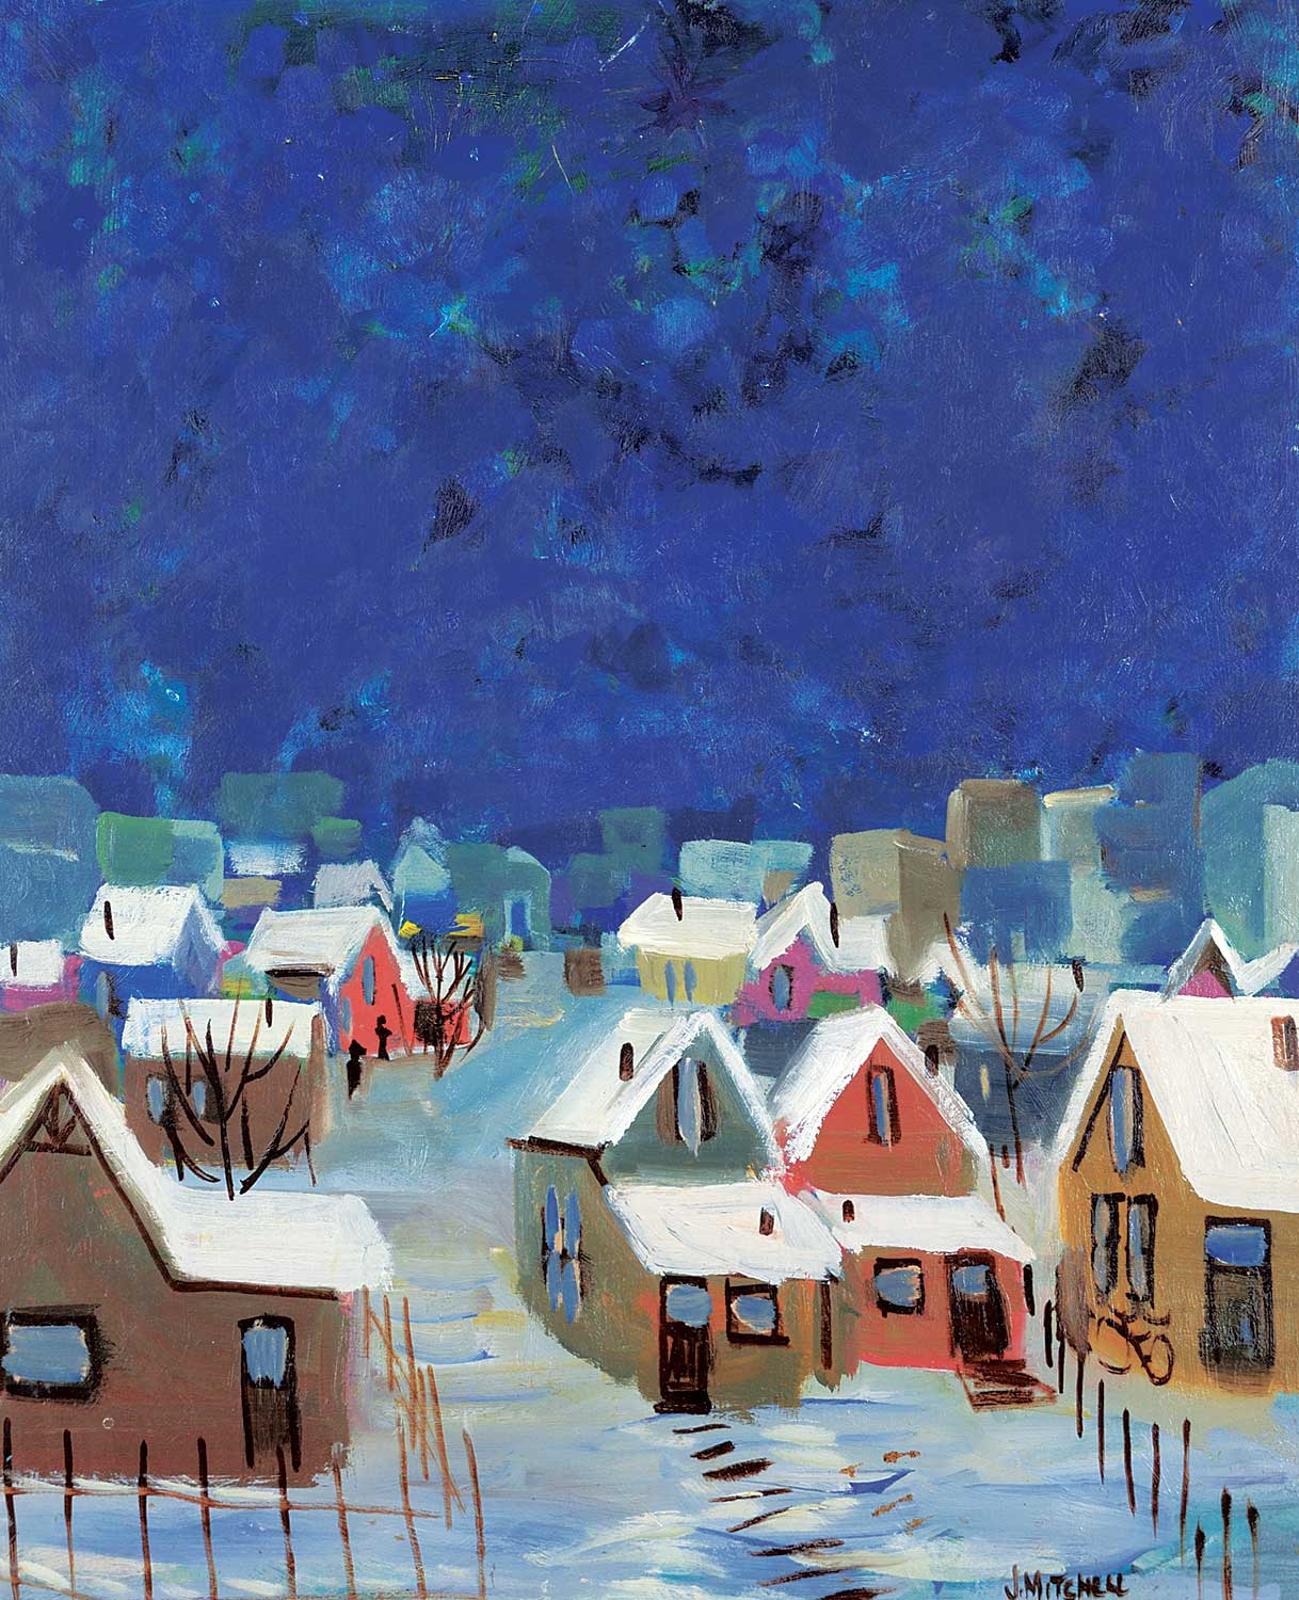 Janet Mitchell (1915-1998) - A Winter Night